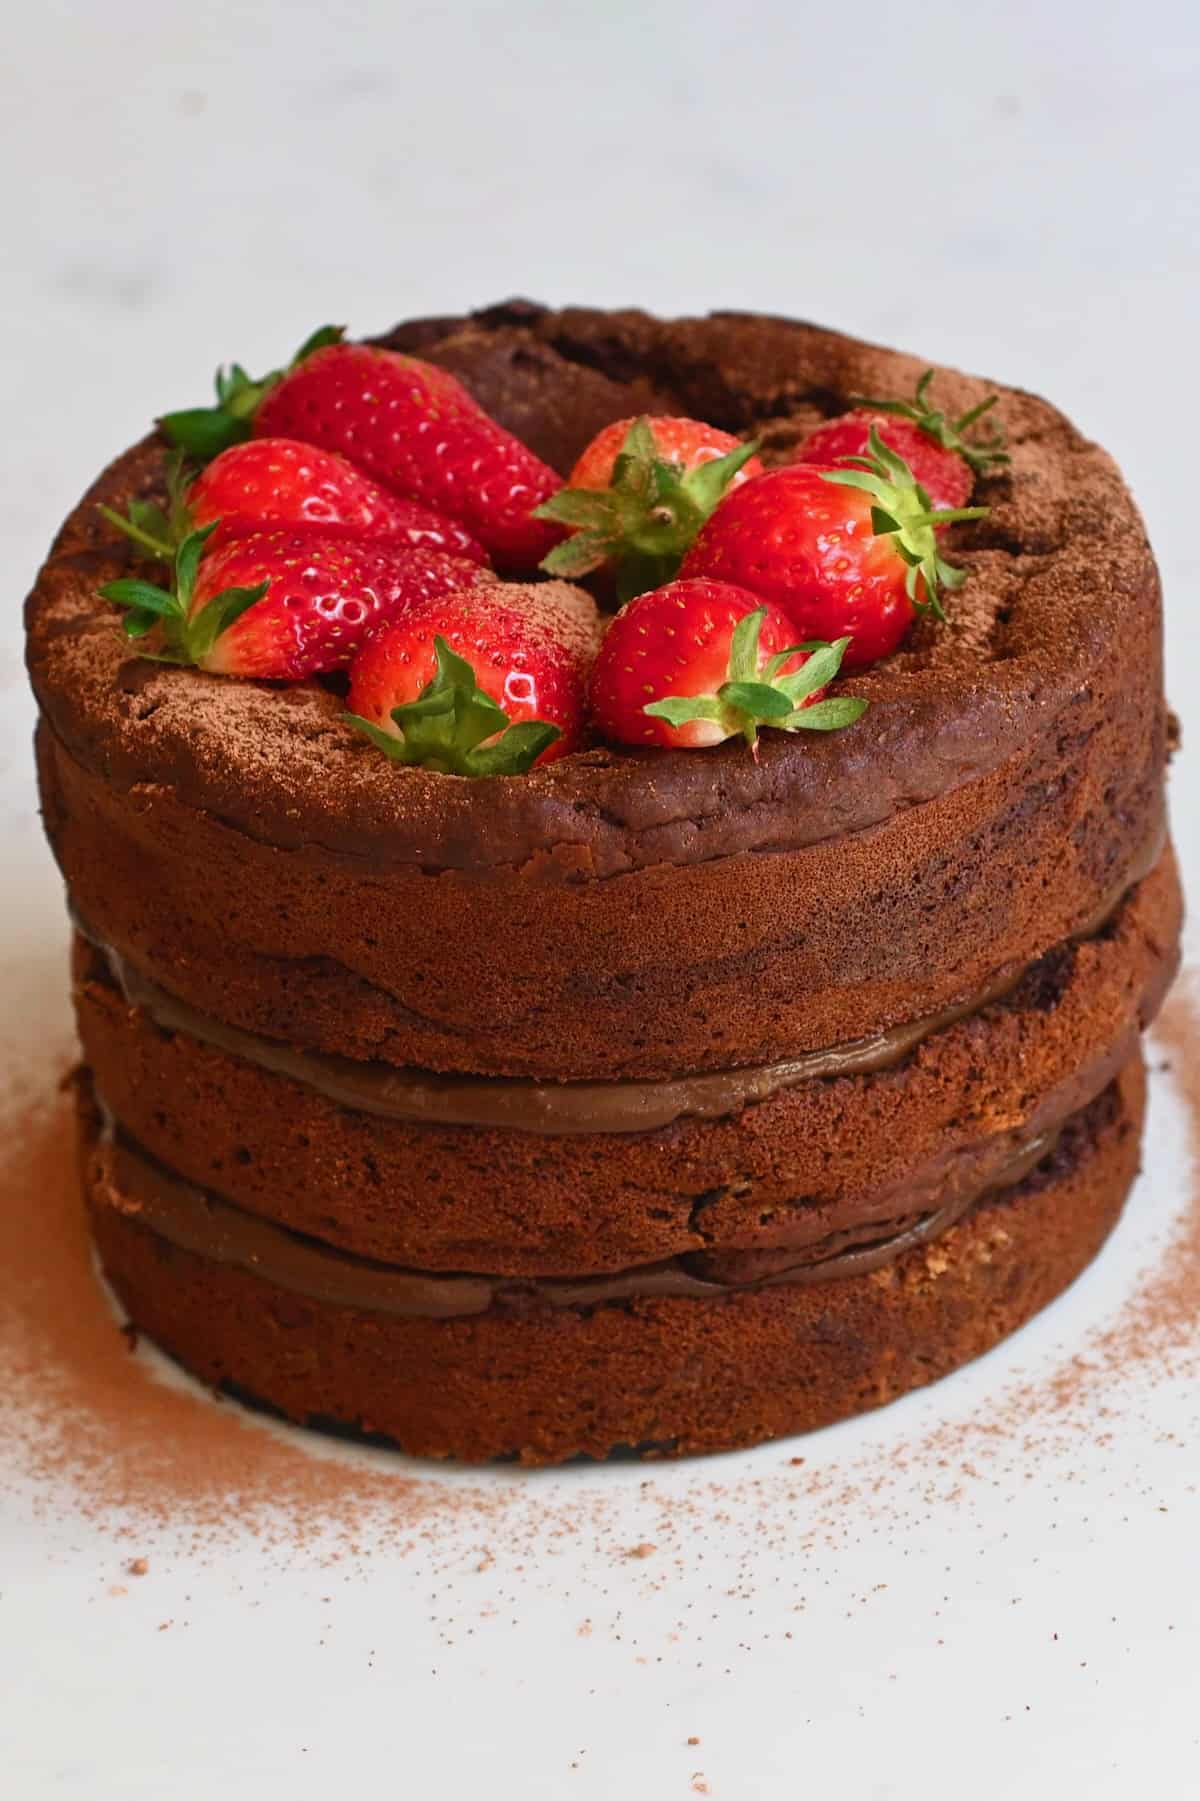 Chocolate zucchini cake topped with strawberries